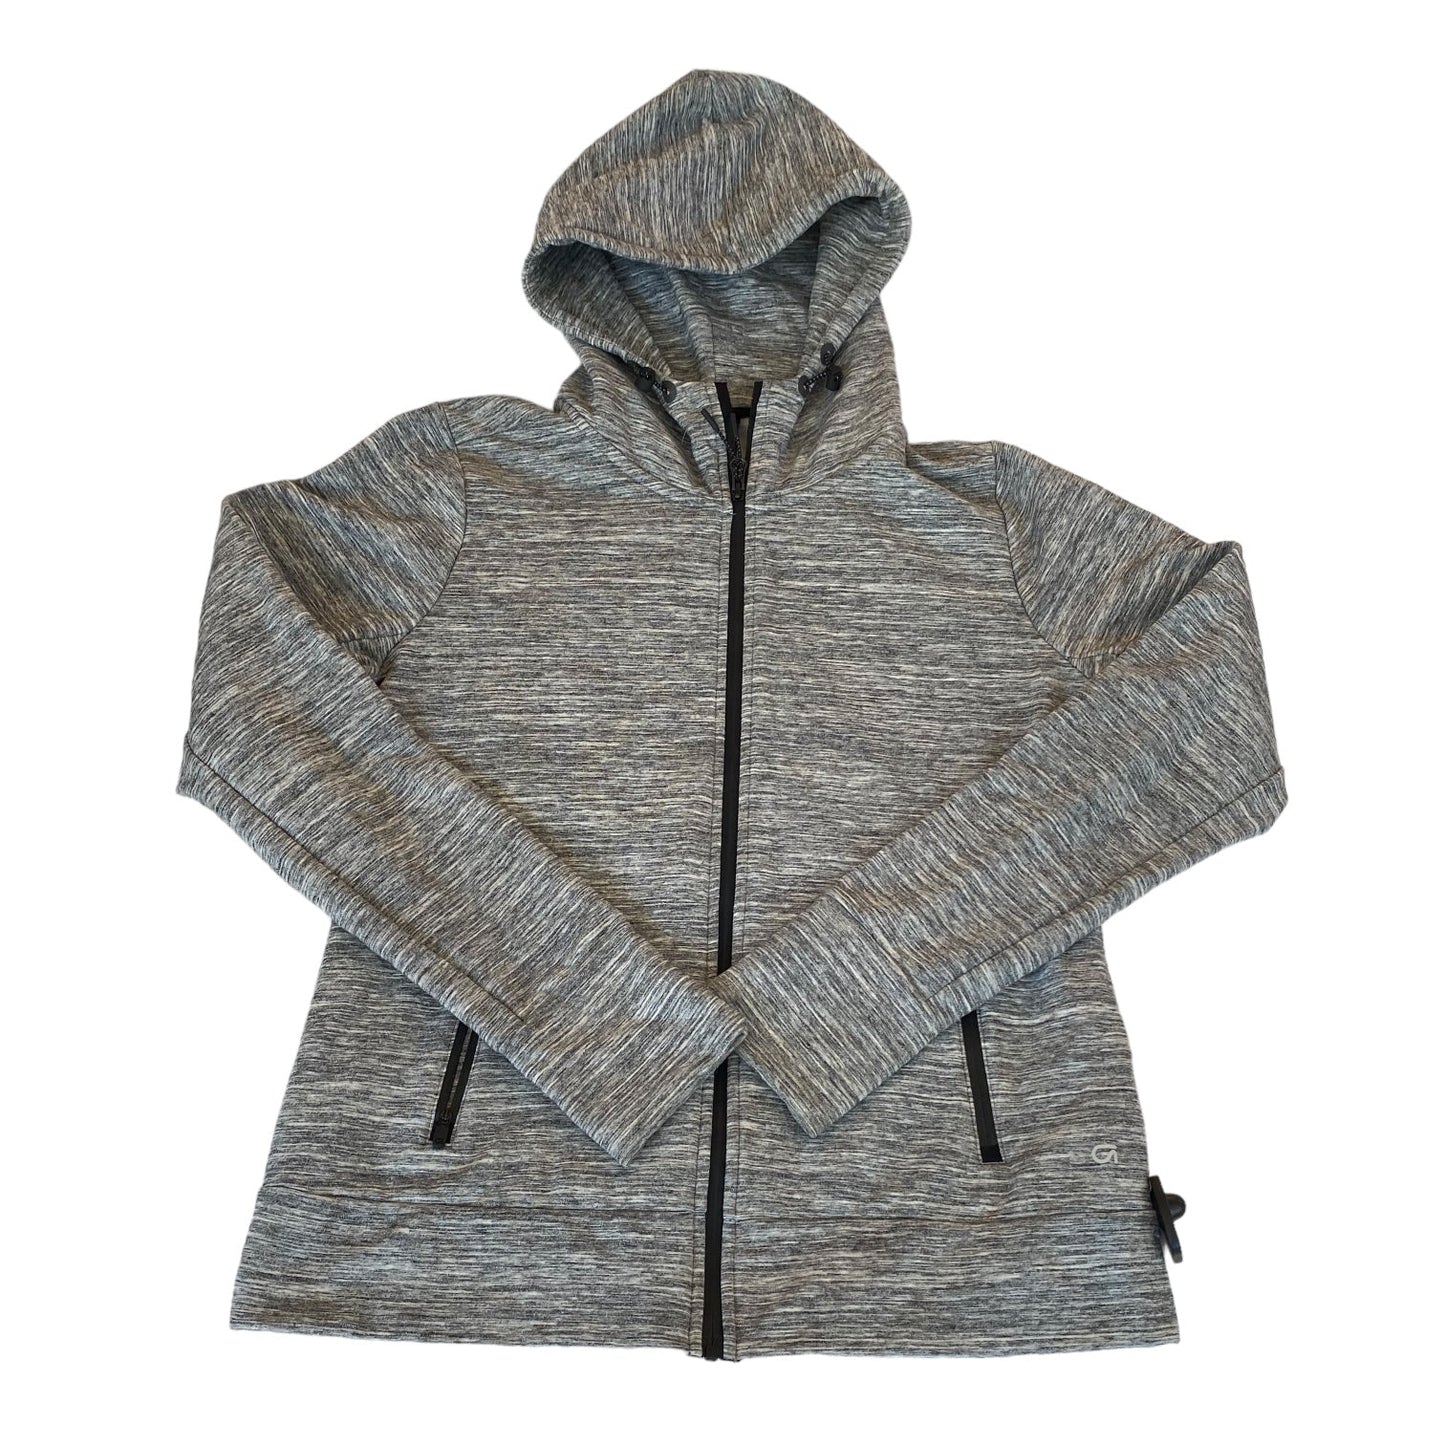 Grey Athletic Jacket Gapfit, Size L